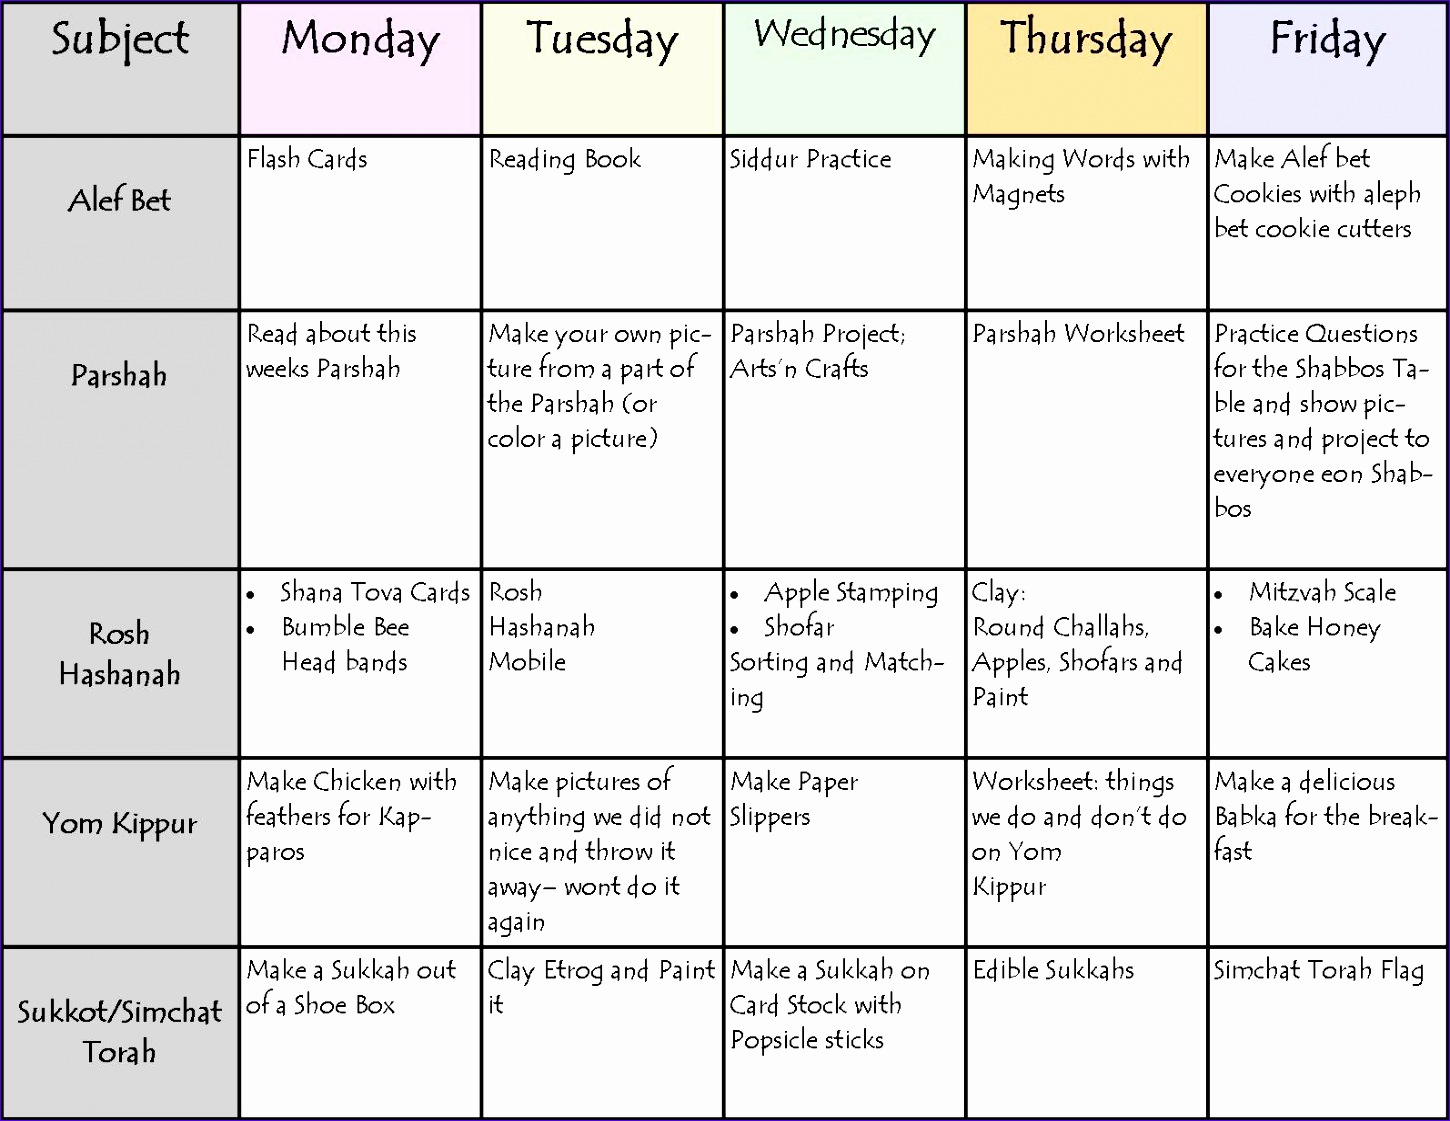 weekly employee shift schedule template excel 1